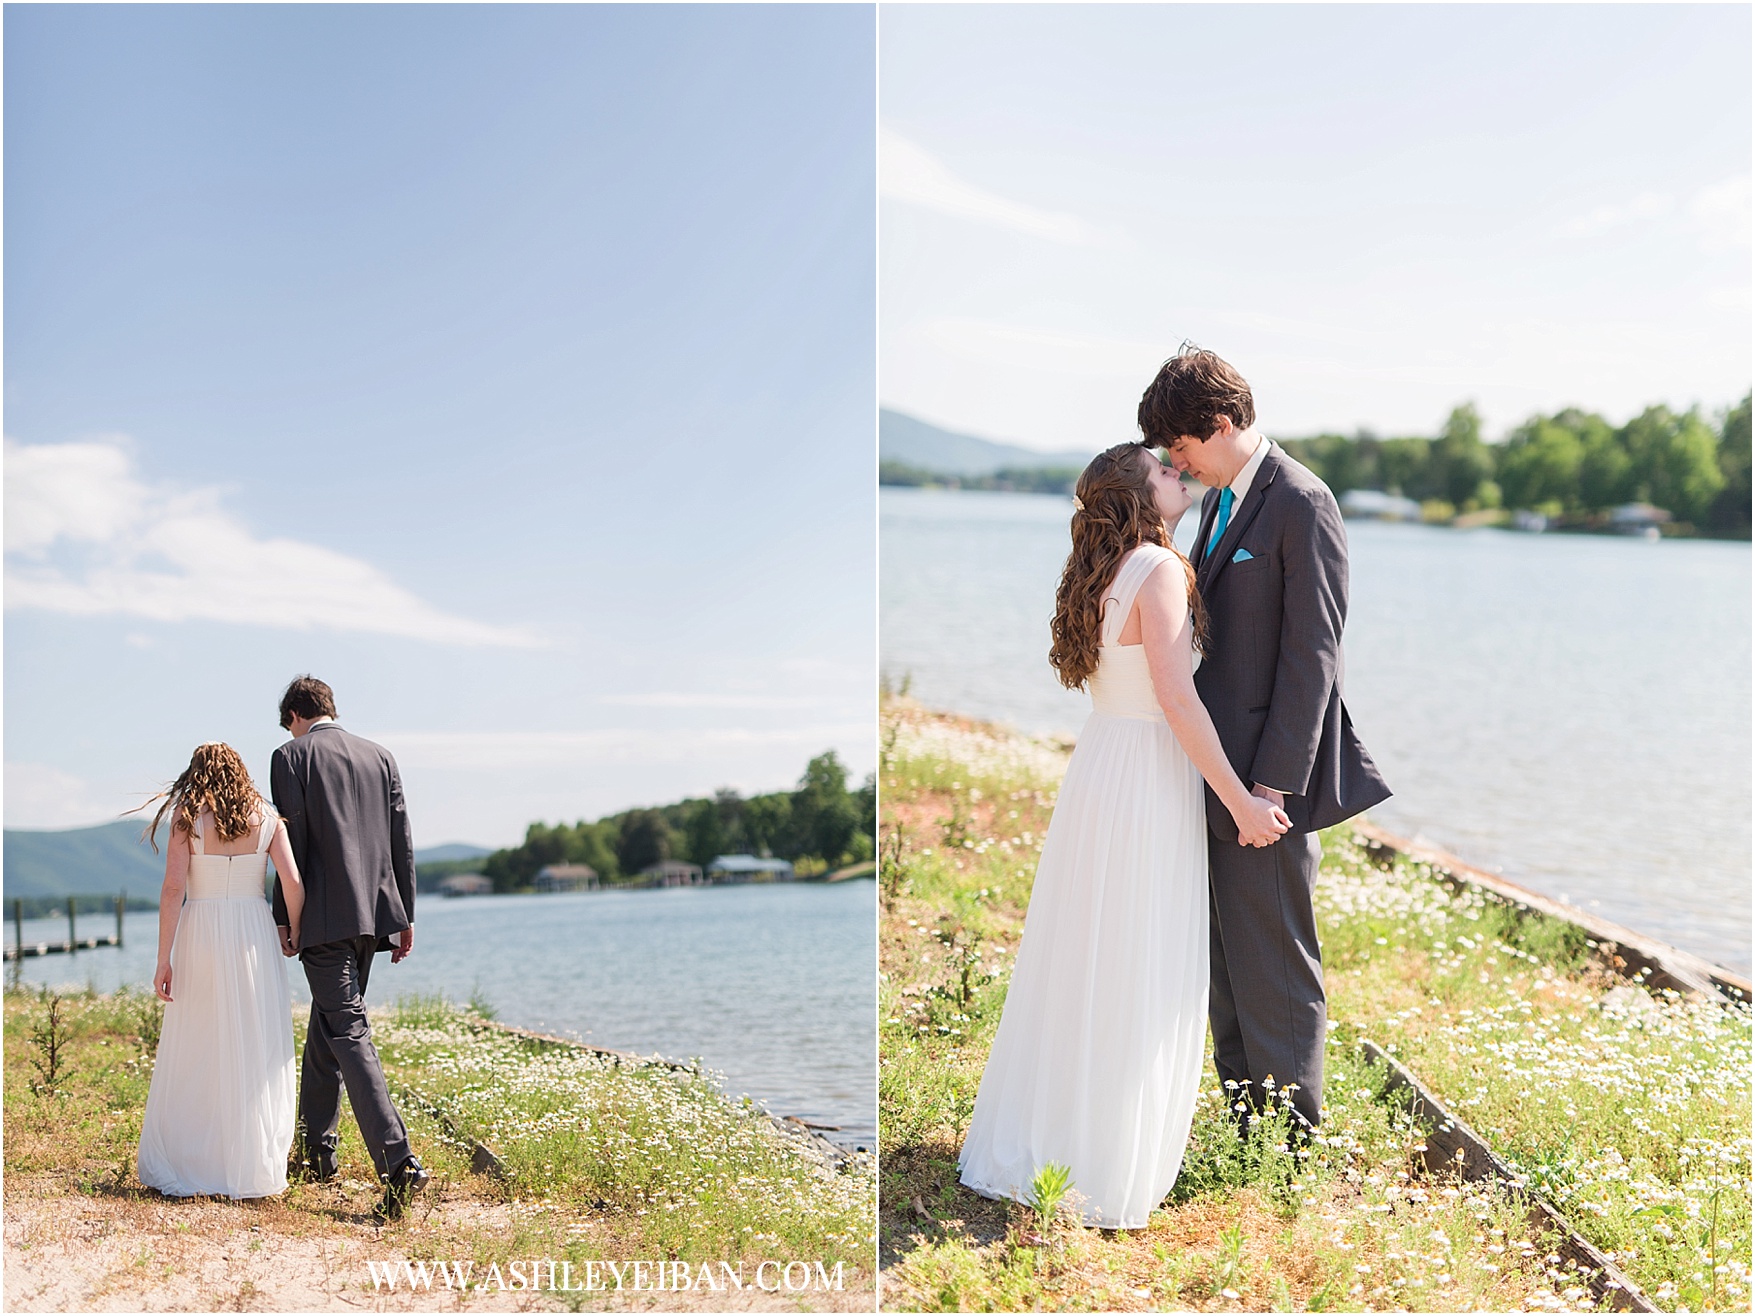 Smith Mountain Lake Wedding || Elopement and Wedding Photographer  || Ashley Eiban Photography || www.ashleyeiban.com